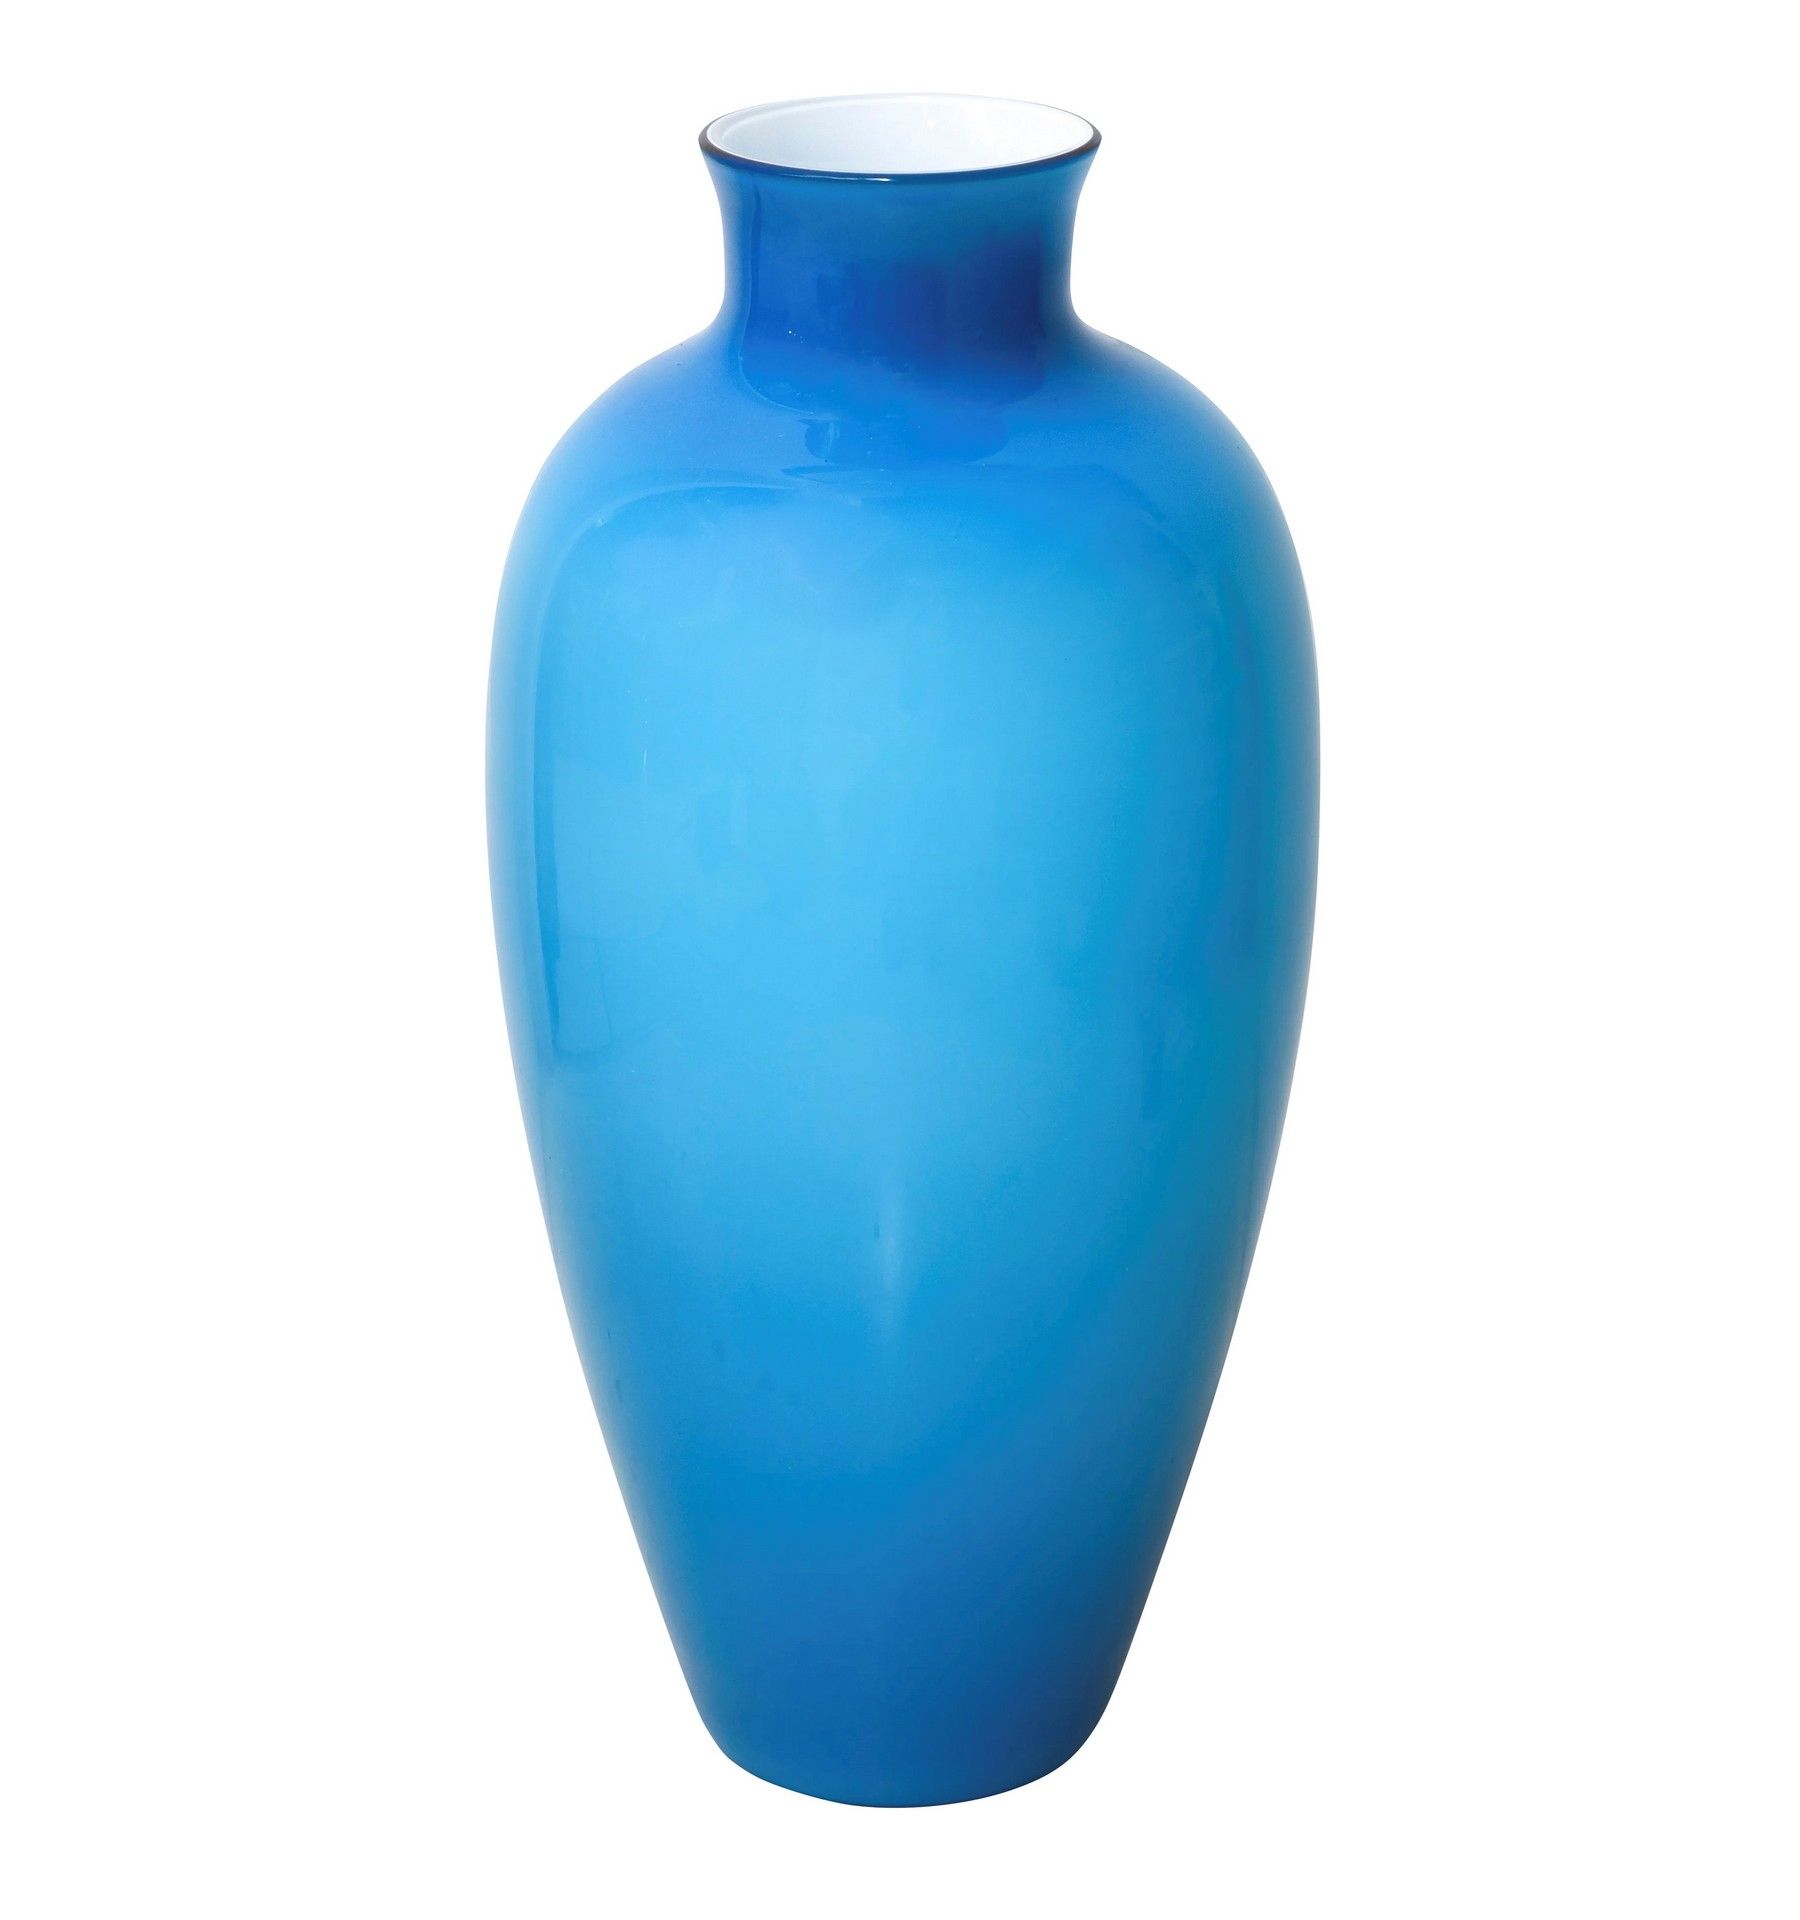 Venini Venini - 大花瓶，1990年h cm 62 搪瓷玻璃栏杆形状。在蓝色的阴影中。底部的钻石点签名 "Venini 90"